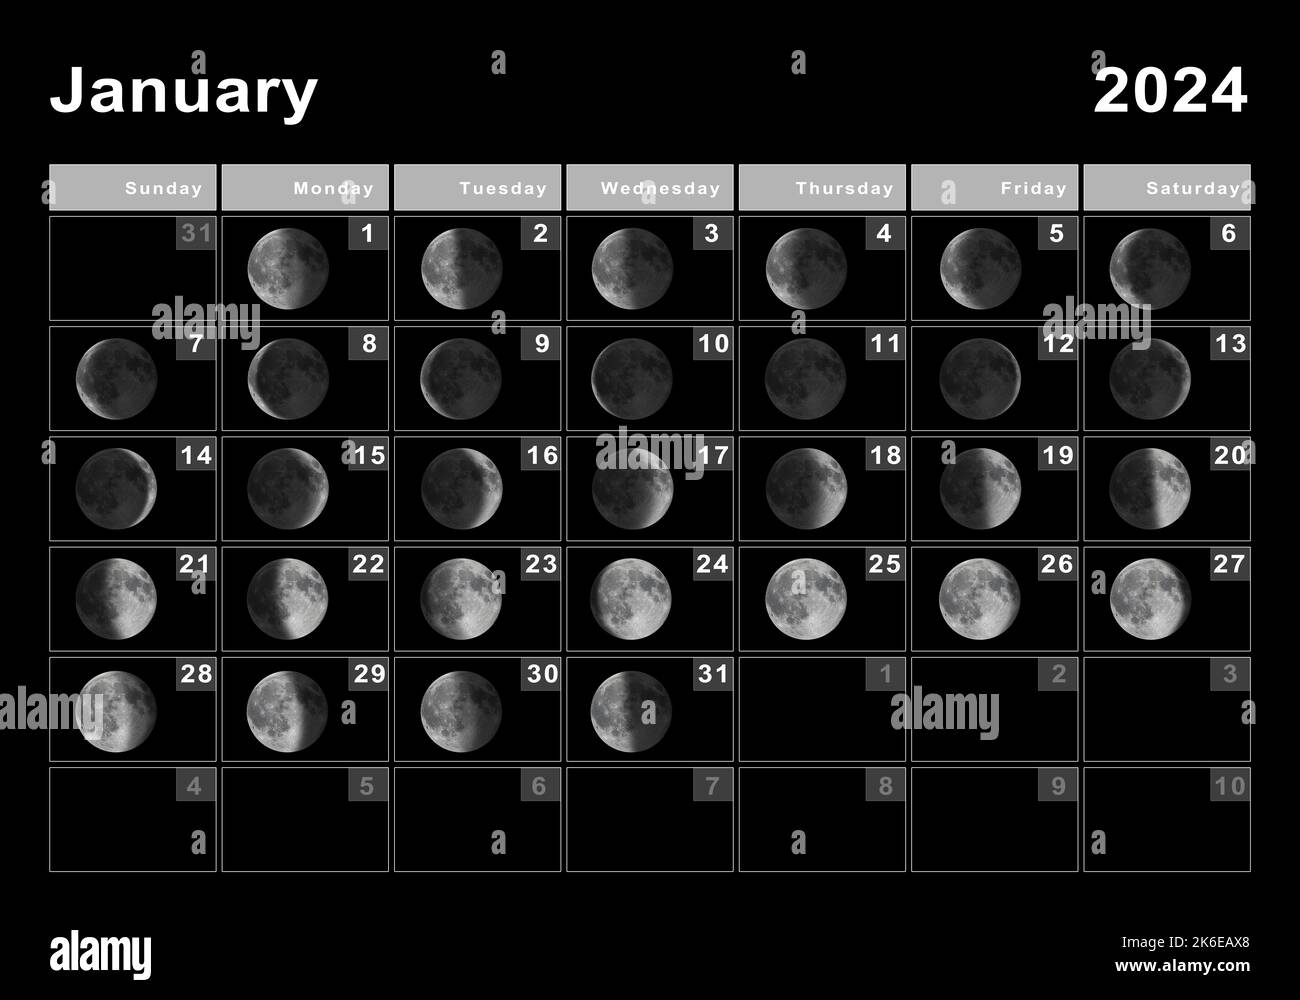 January 2024 Calendar With Moon Phases 2024 CALENDAR PRINTABLE - Free Printable 2024 Calendar With Holidays And Moon Phases